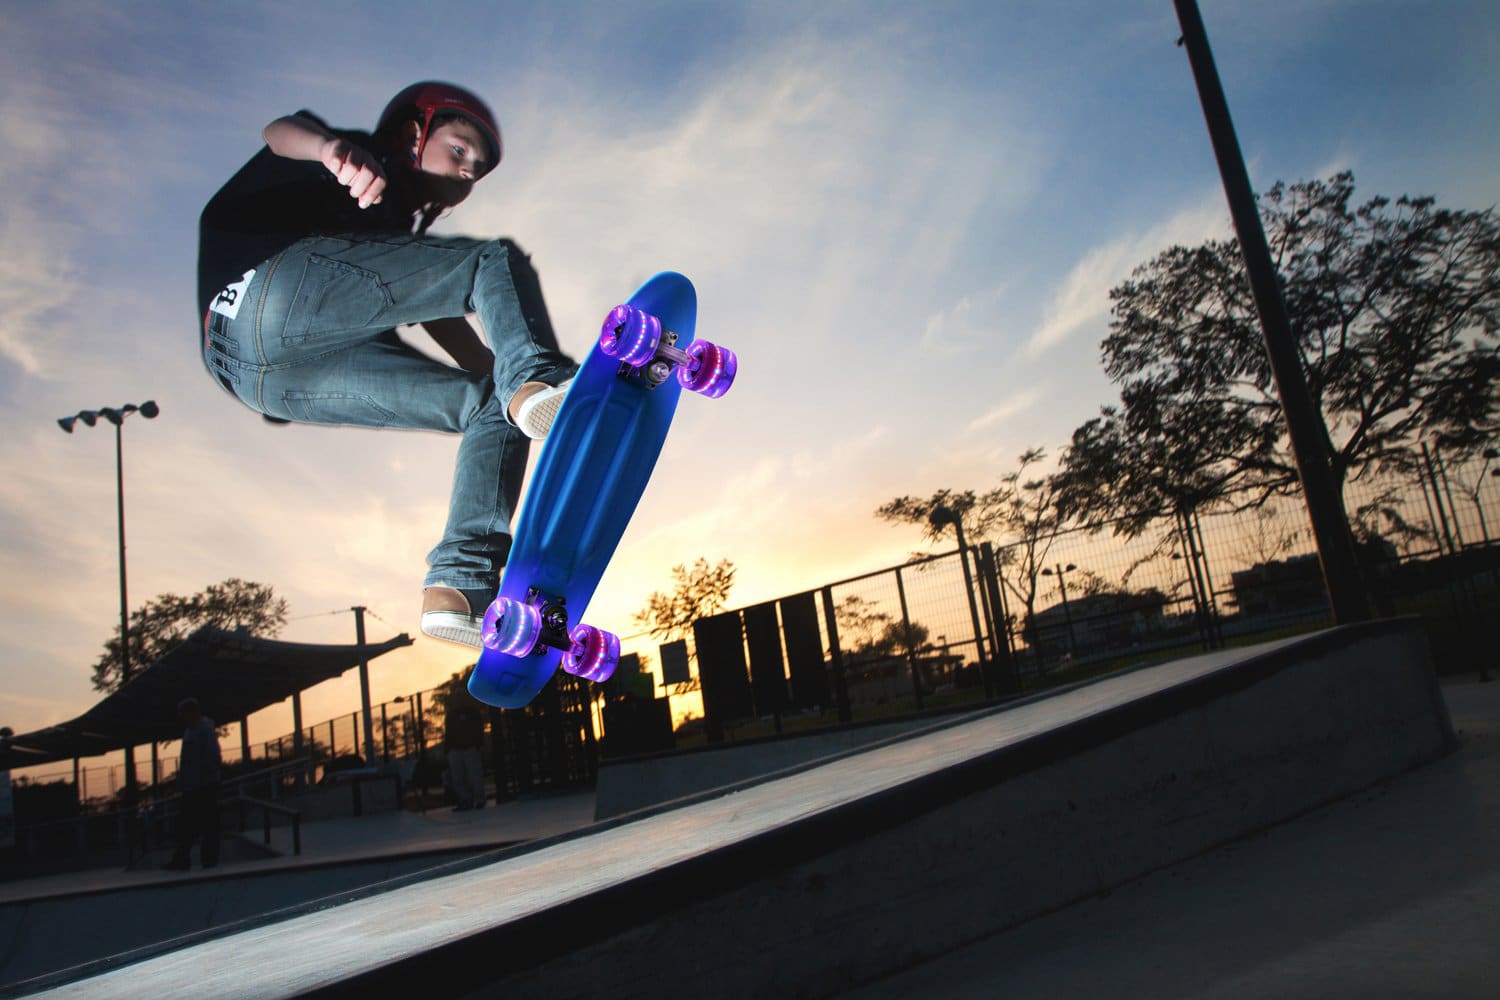 visit skateboards review